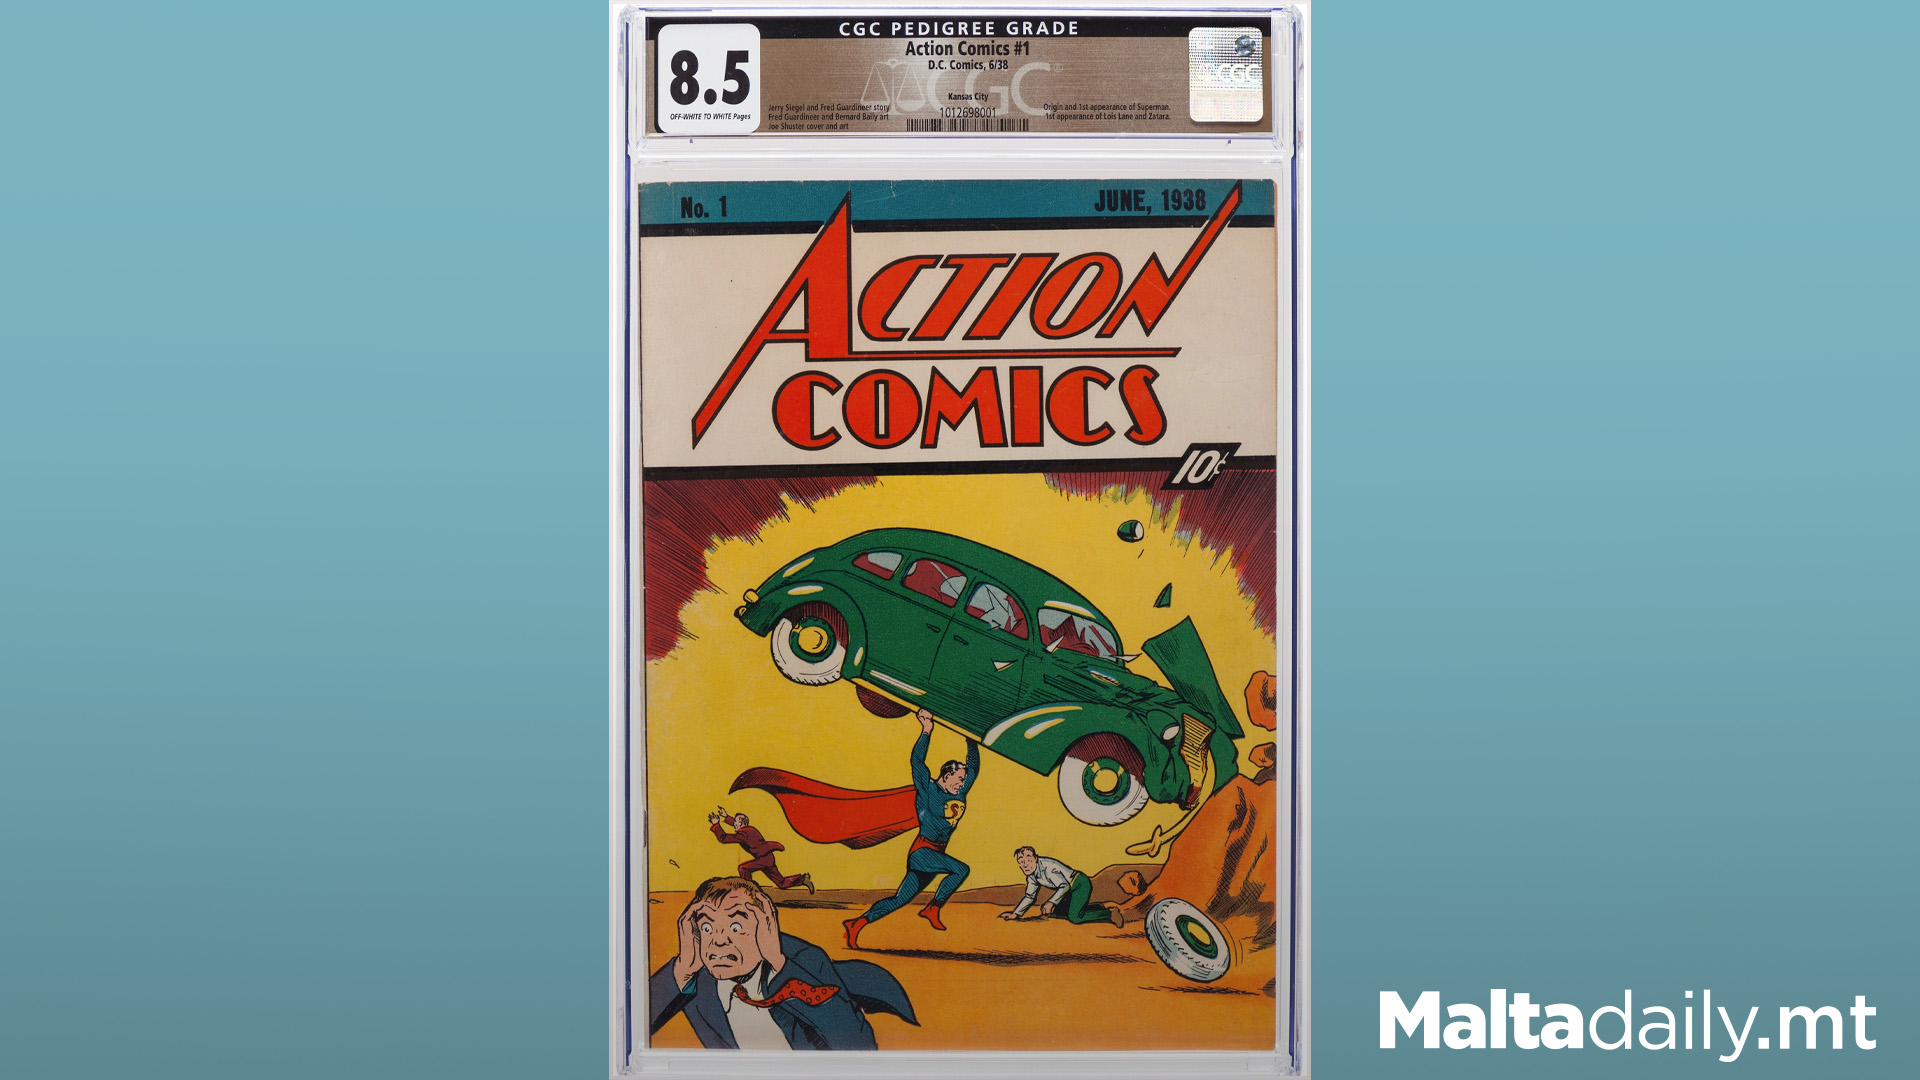 Original 10c Superman Comic Sells For $6 Million